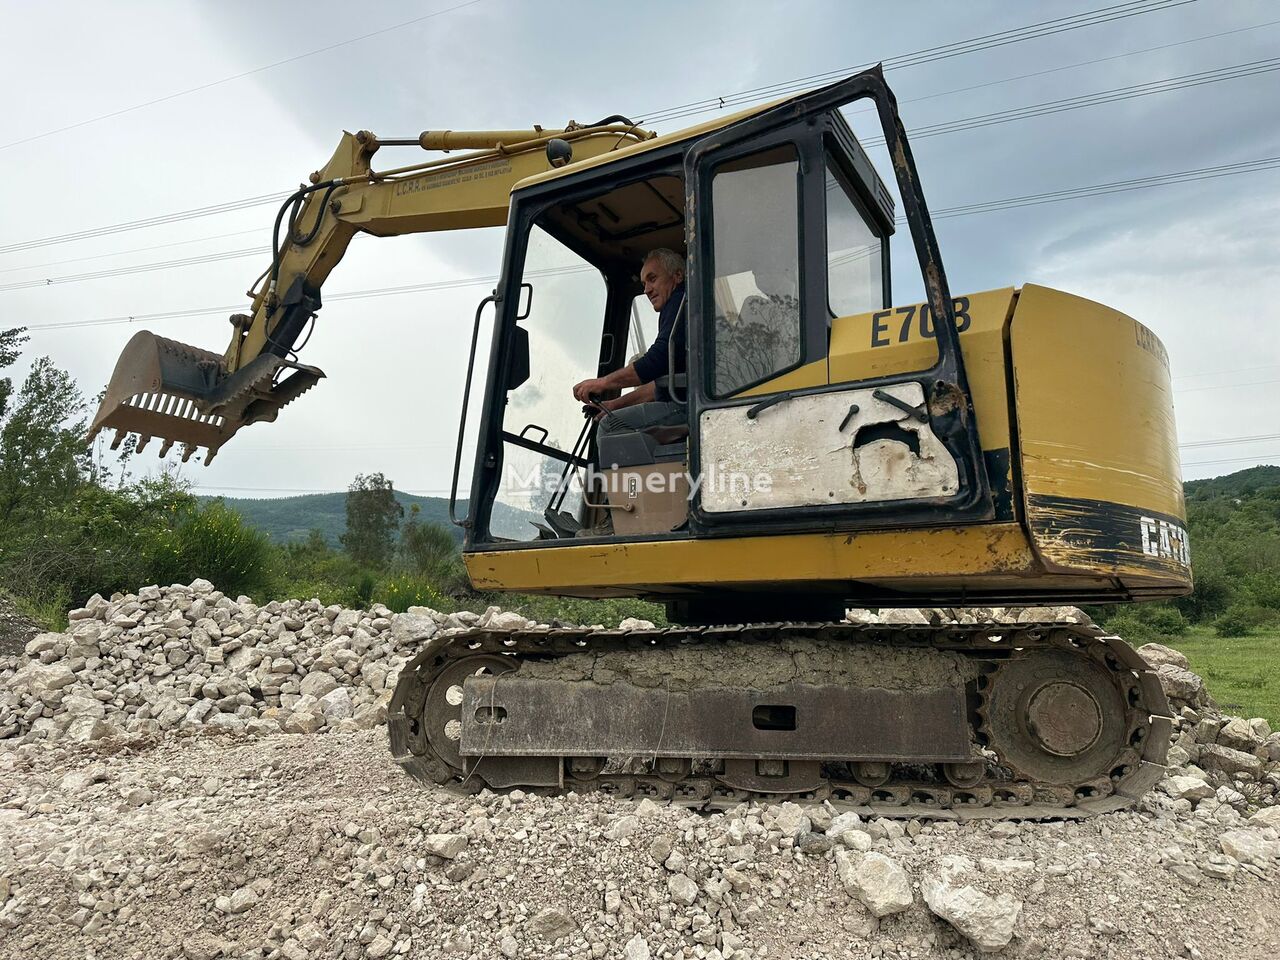 Caterpillar E70 tracked excavator